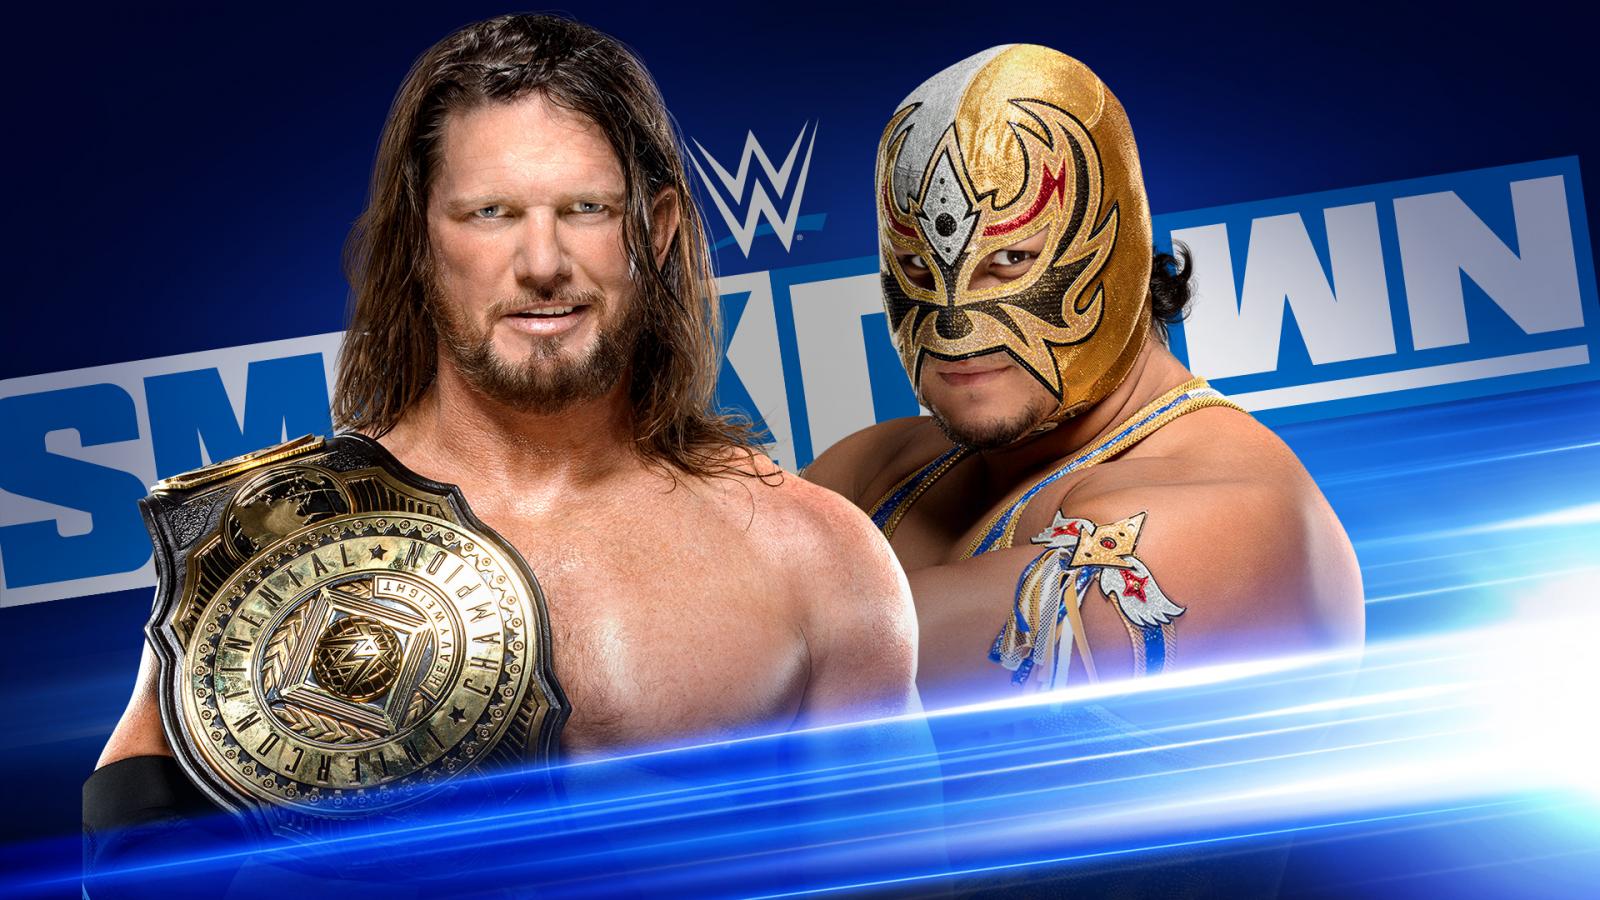 AJ Styles vs Gran Metalic - Intercontinental Championship Match WWE SmackDown July 2020